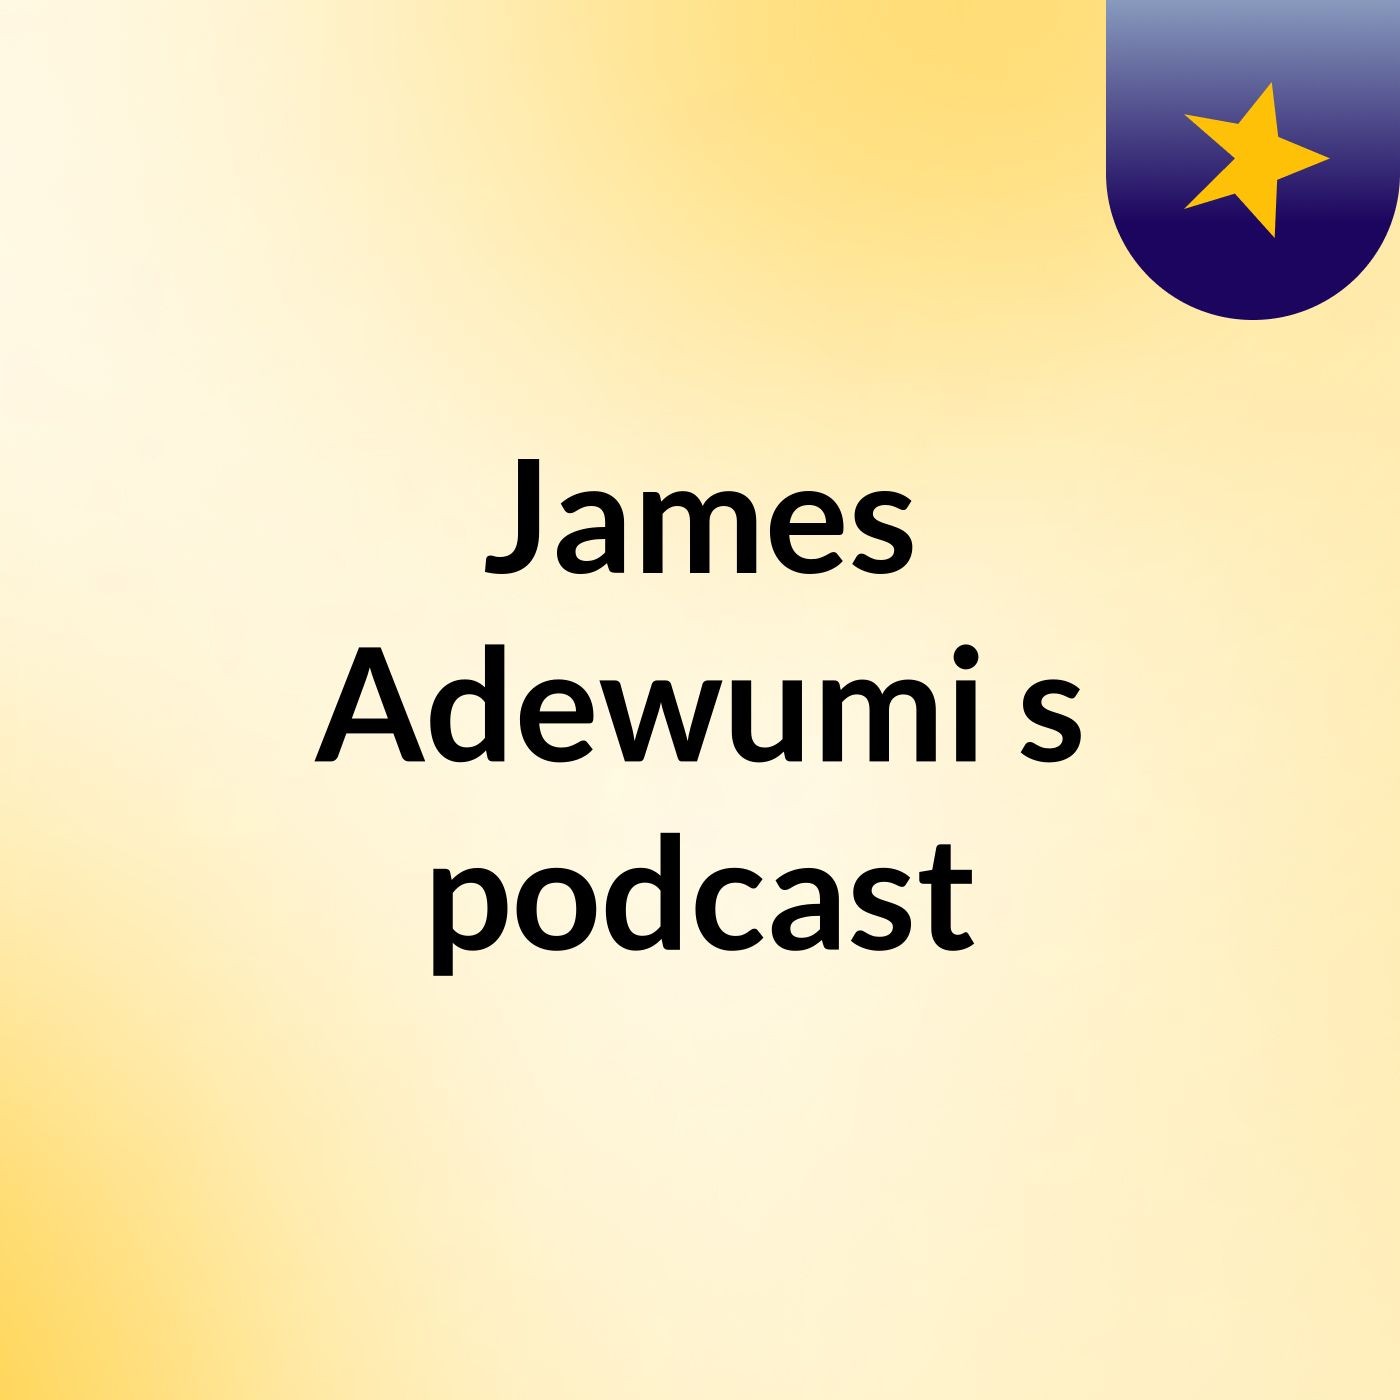 James Adewumi's podcast